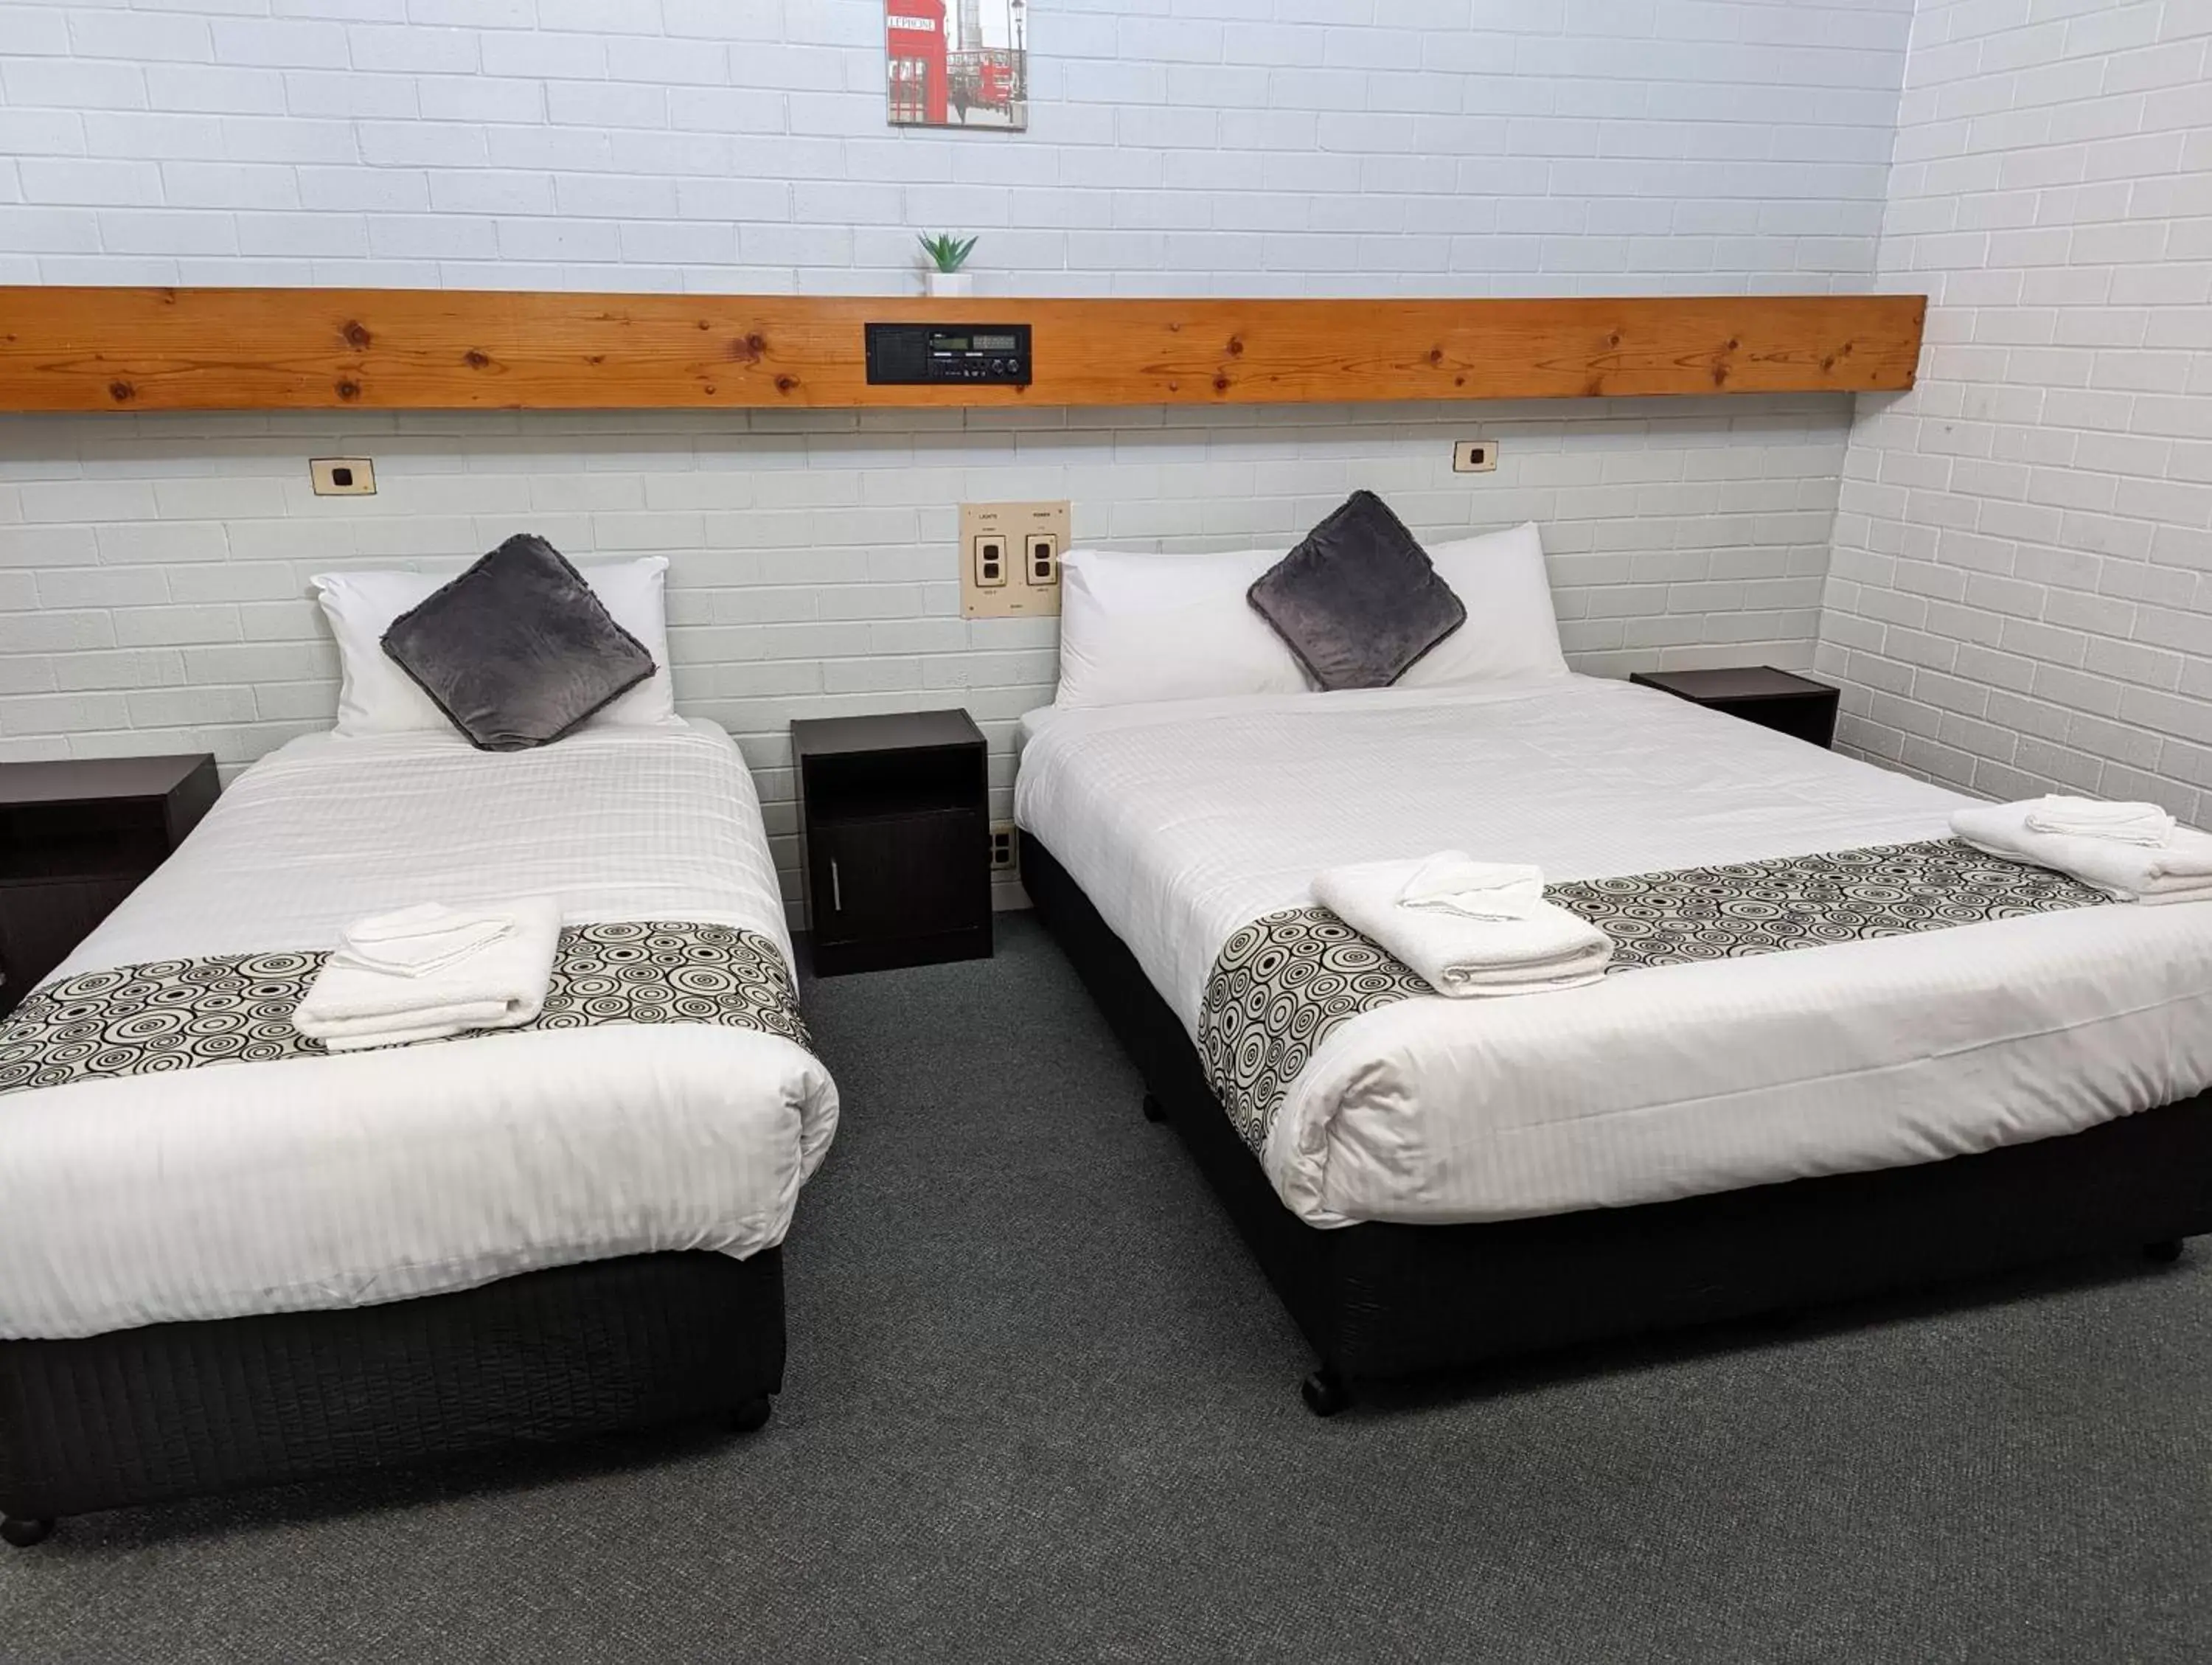 Bed in Elm Court Motel